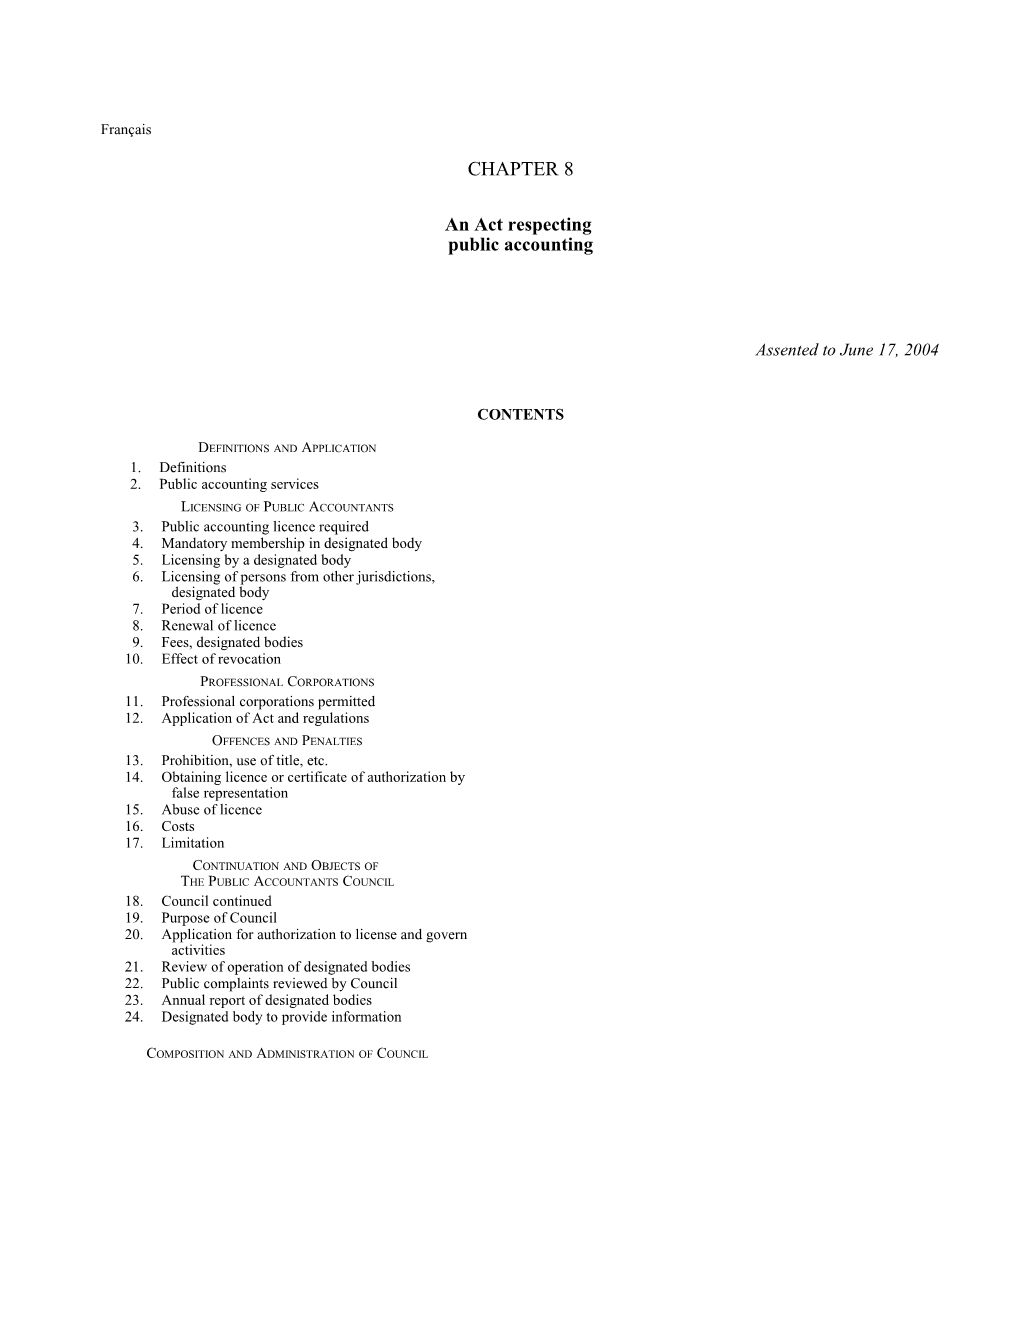 Public Accounting Act, 2004, S.O. 2004, C. 8 - Bill 94